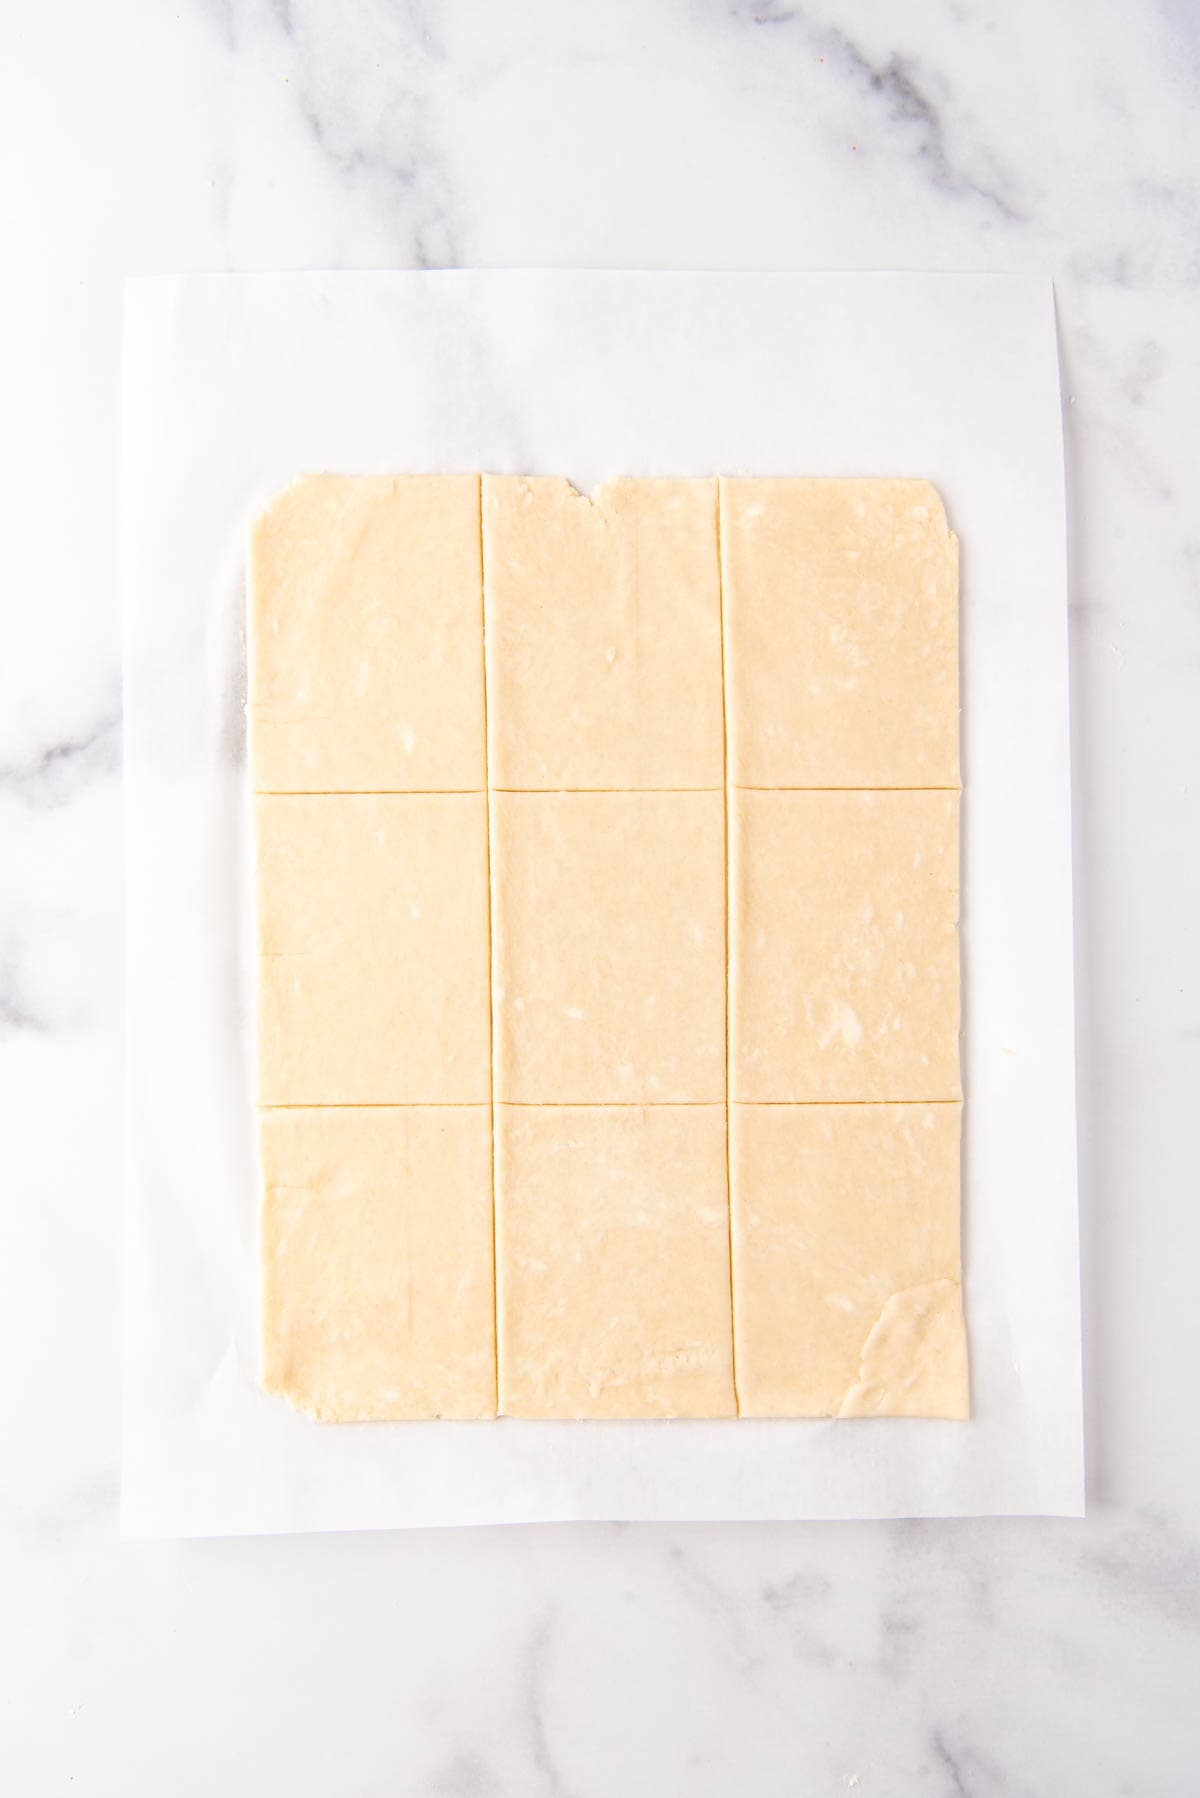 Pie dough trimmed into nine 3x4-inch rectangles on parchment paper.